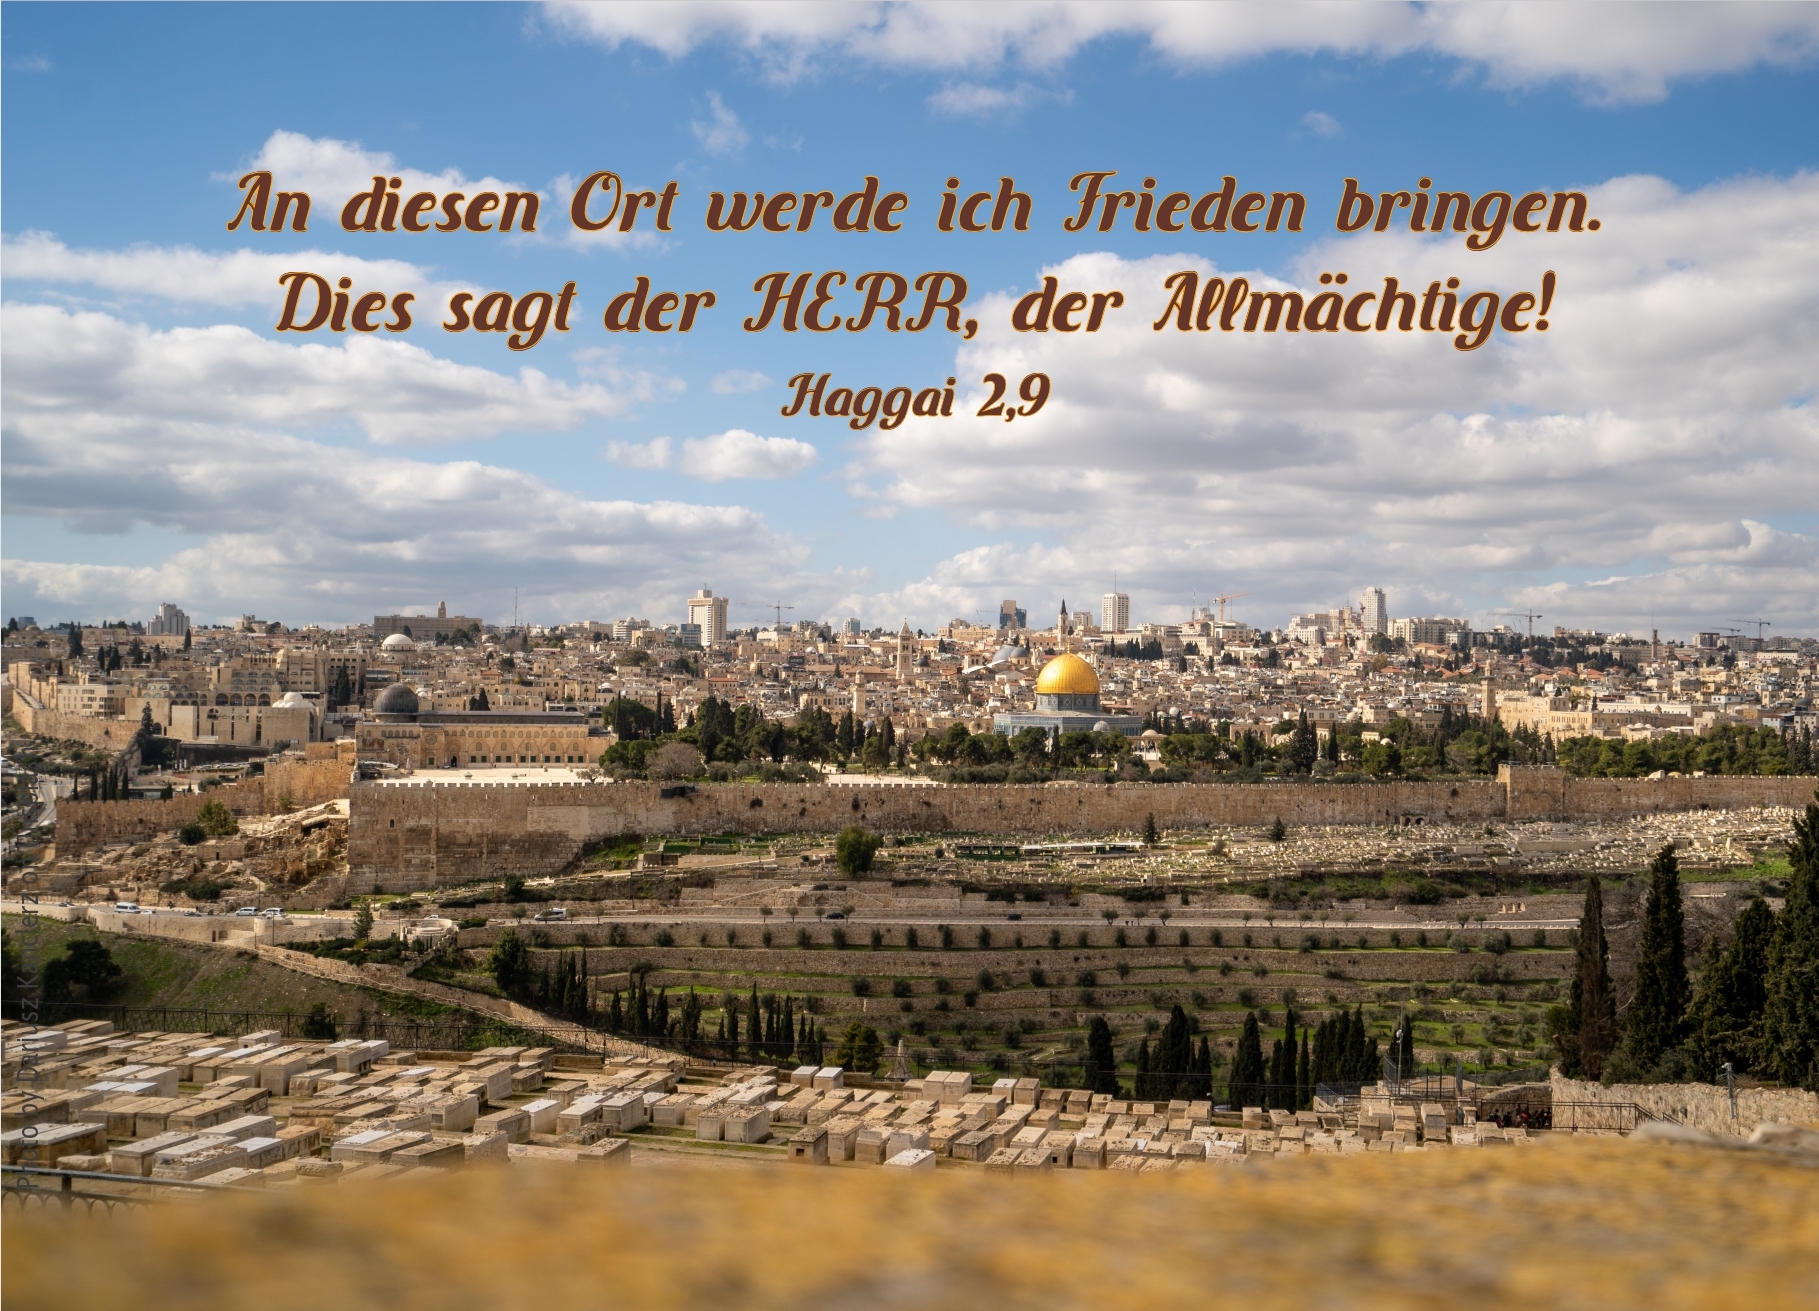 alt="Jerusalem_mit_Tempelberg_erwartet_bibelhoerbuch_Haggai"